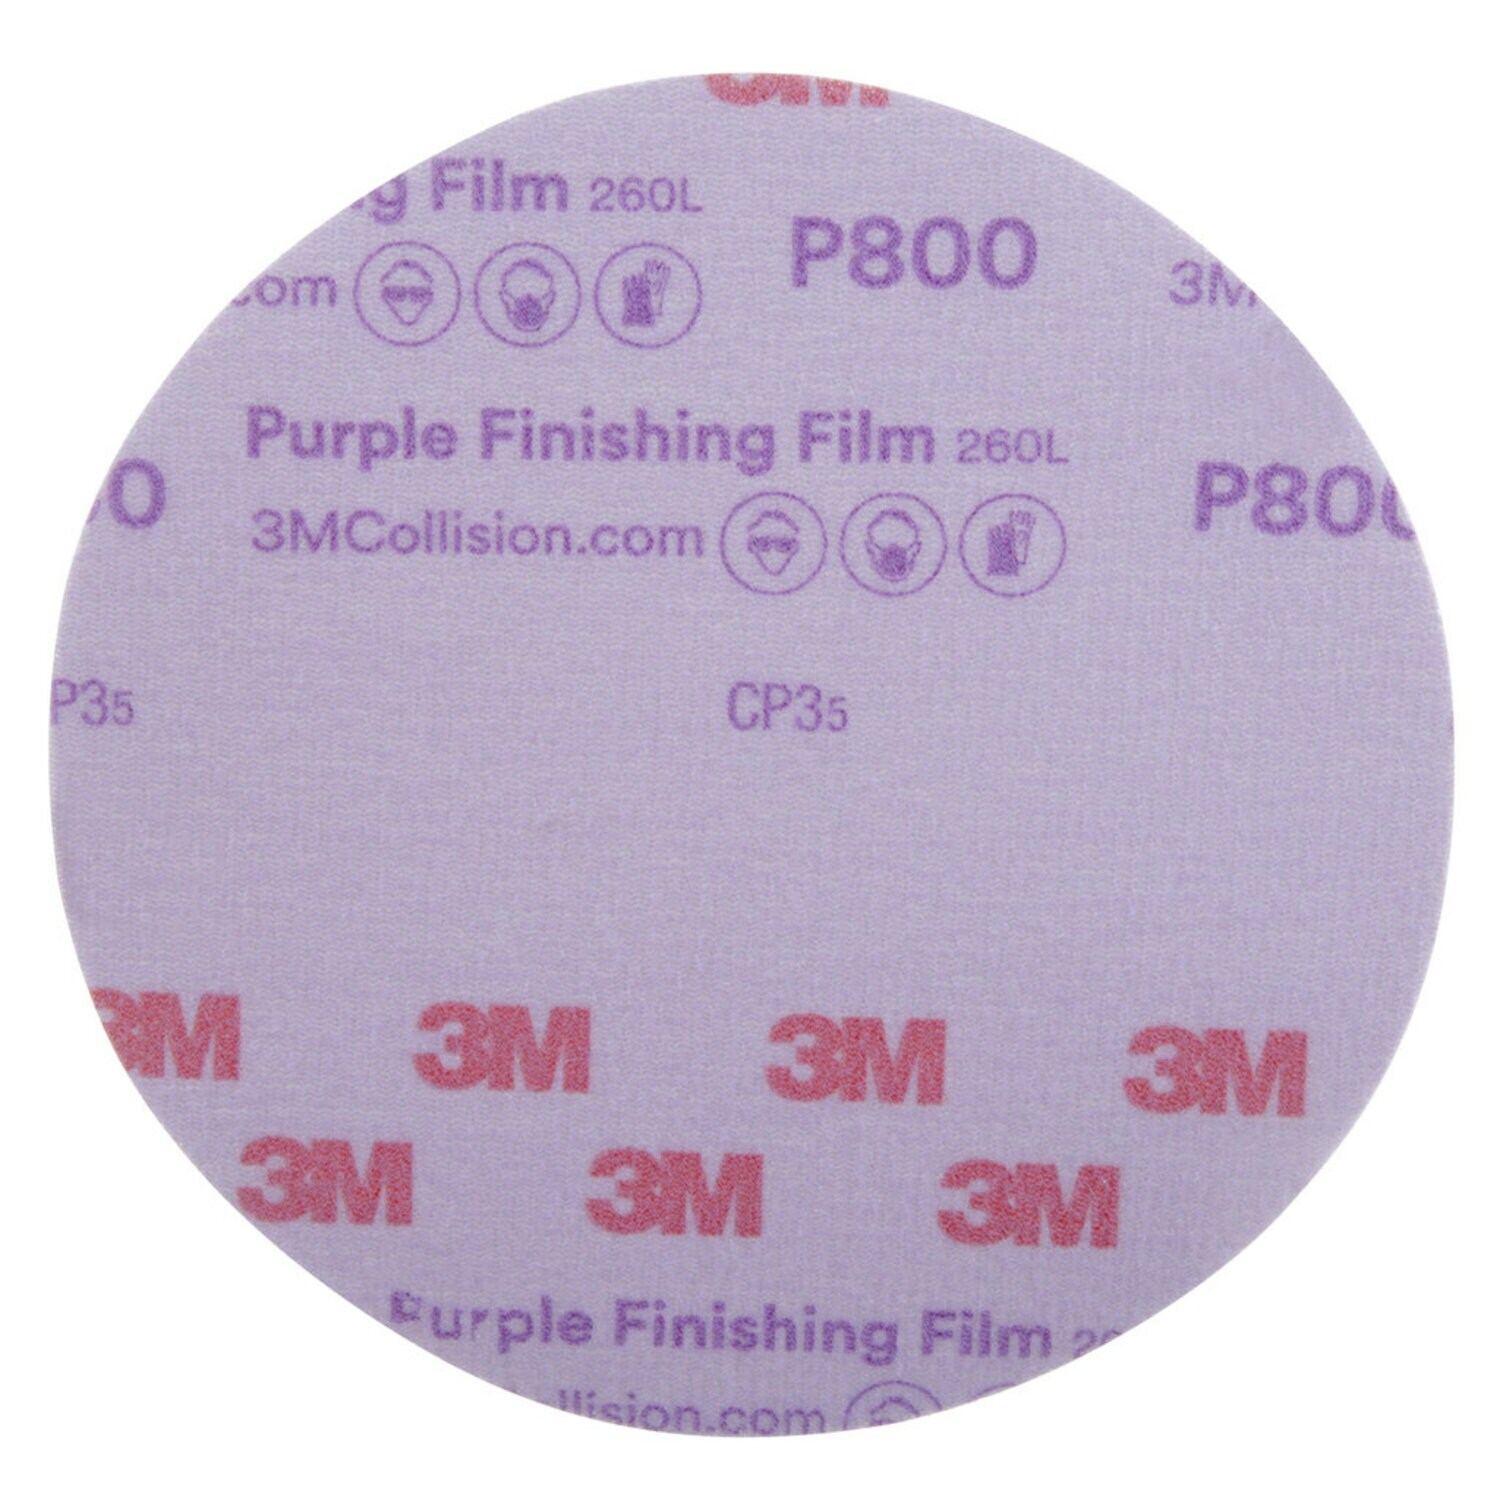 7100122792 - 3M Hookit Purple Finishing Film Abrasive Disc 260L, 30670, 6 in, P800,
50 discs per carton, 4 cartons per case